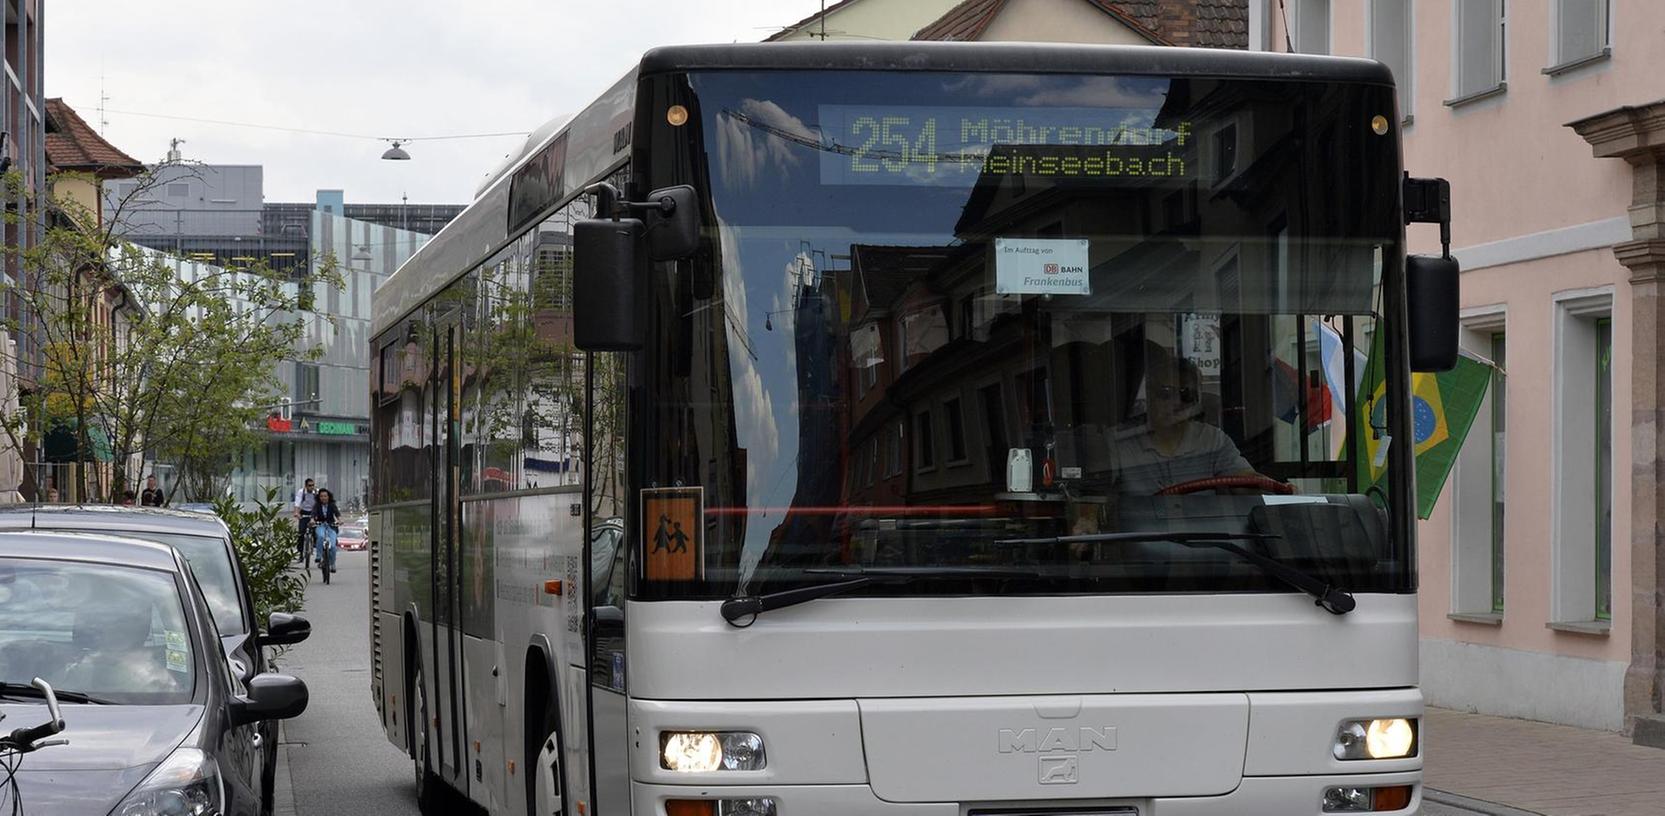 Möhrendorfer wollen regelmäßig getakteten Bus